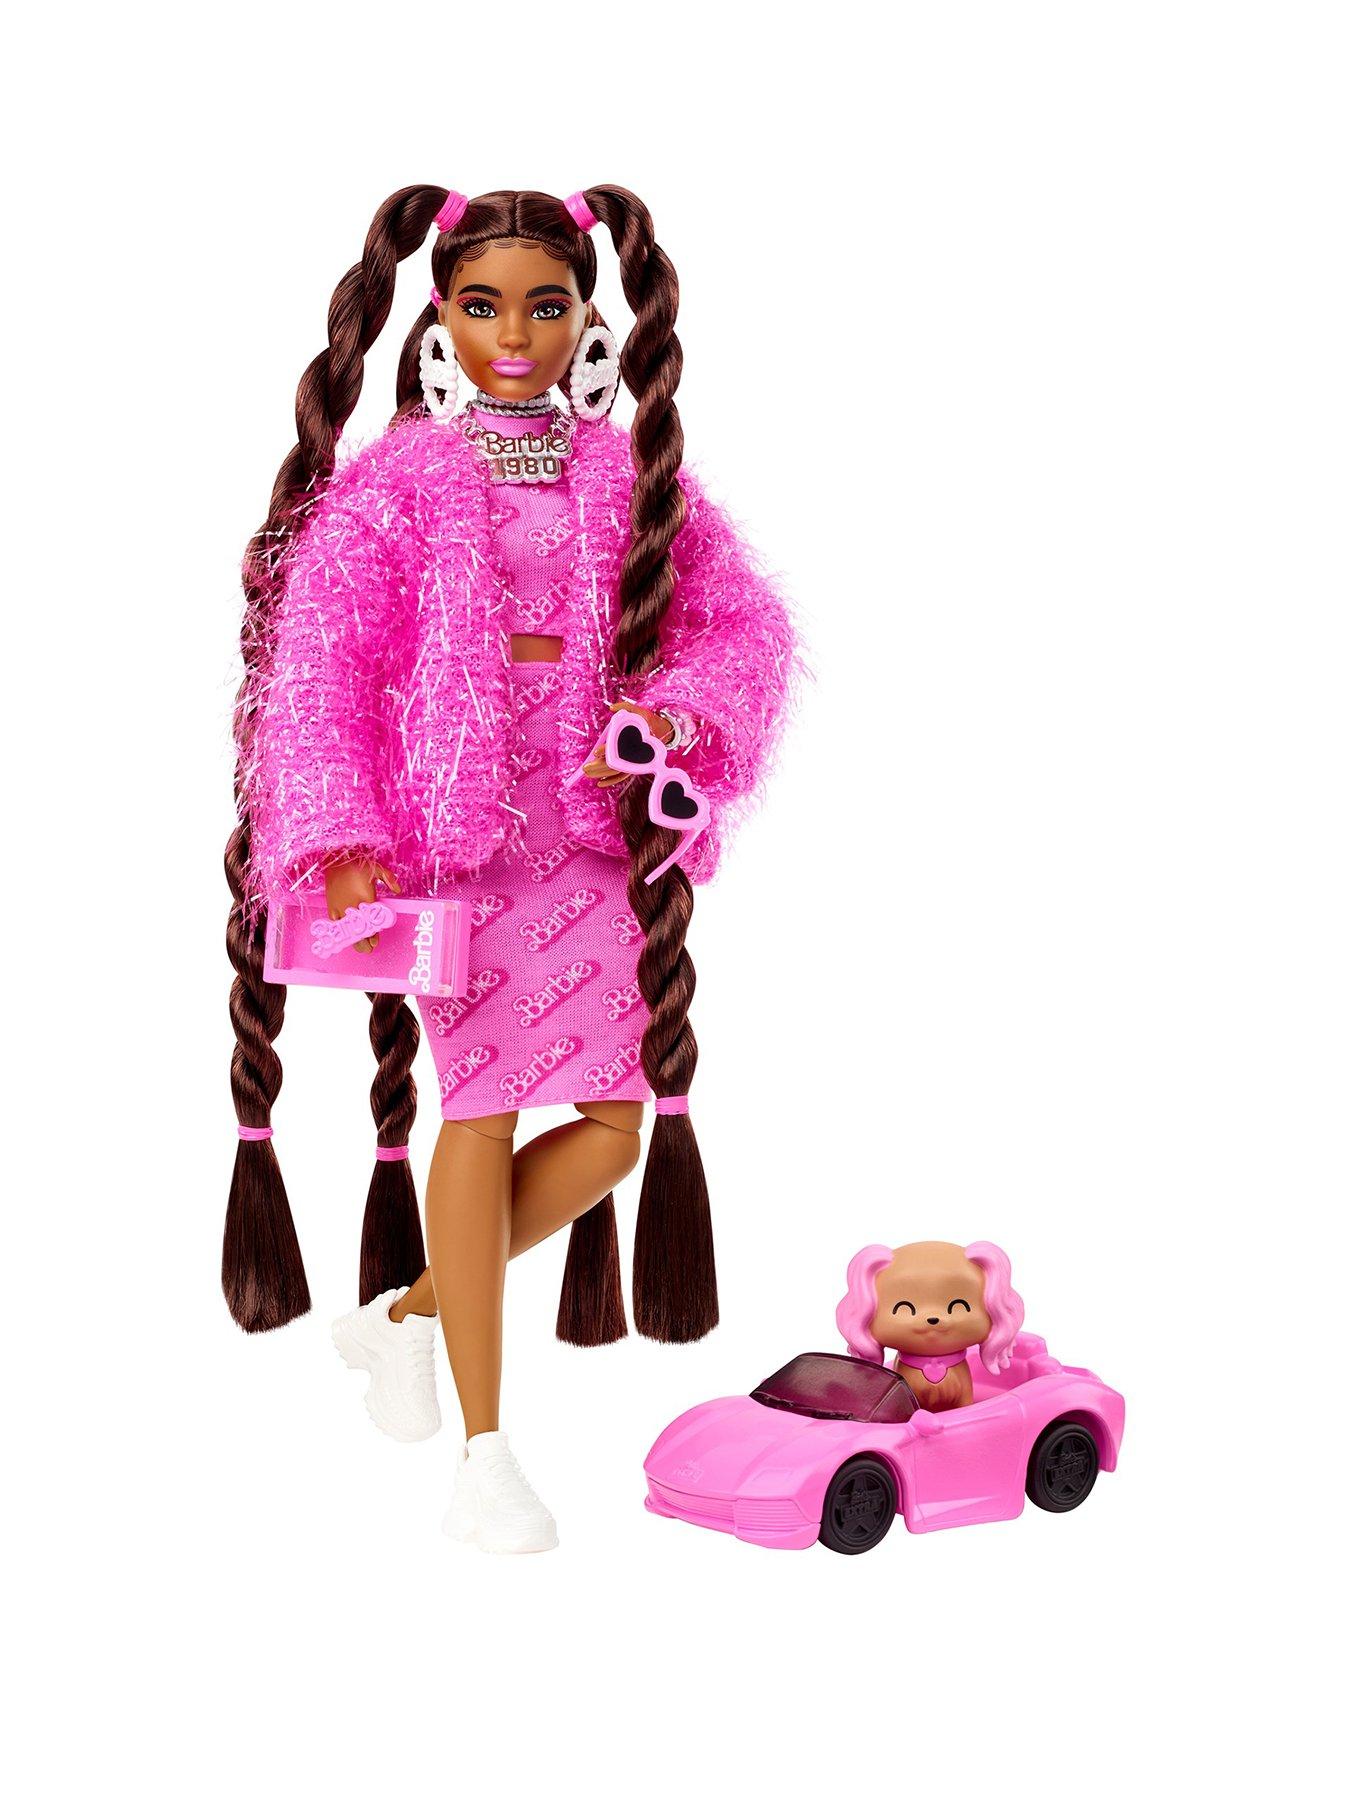 Toy Pink Barbie Details about   Mattel Fashionistas Doll Denim Dress Pink Hair New Toy 